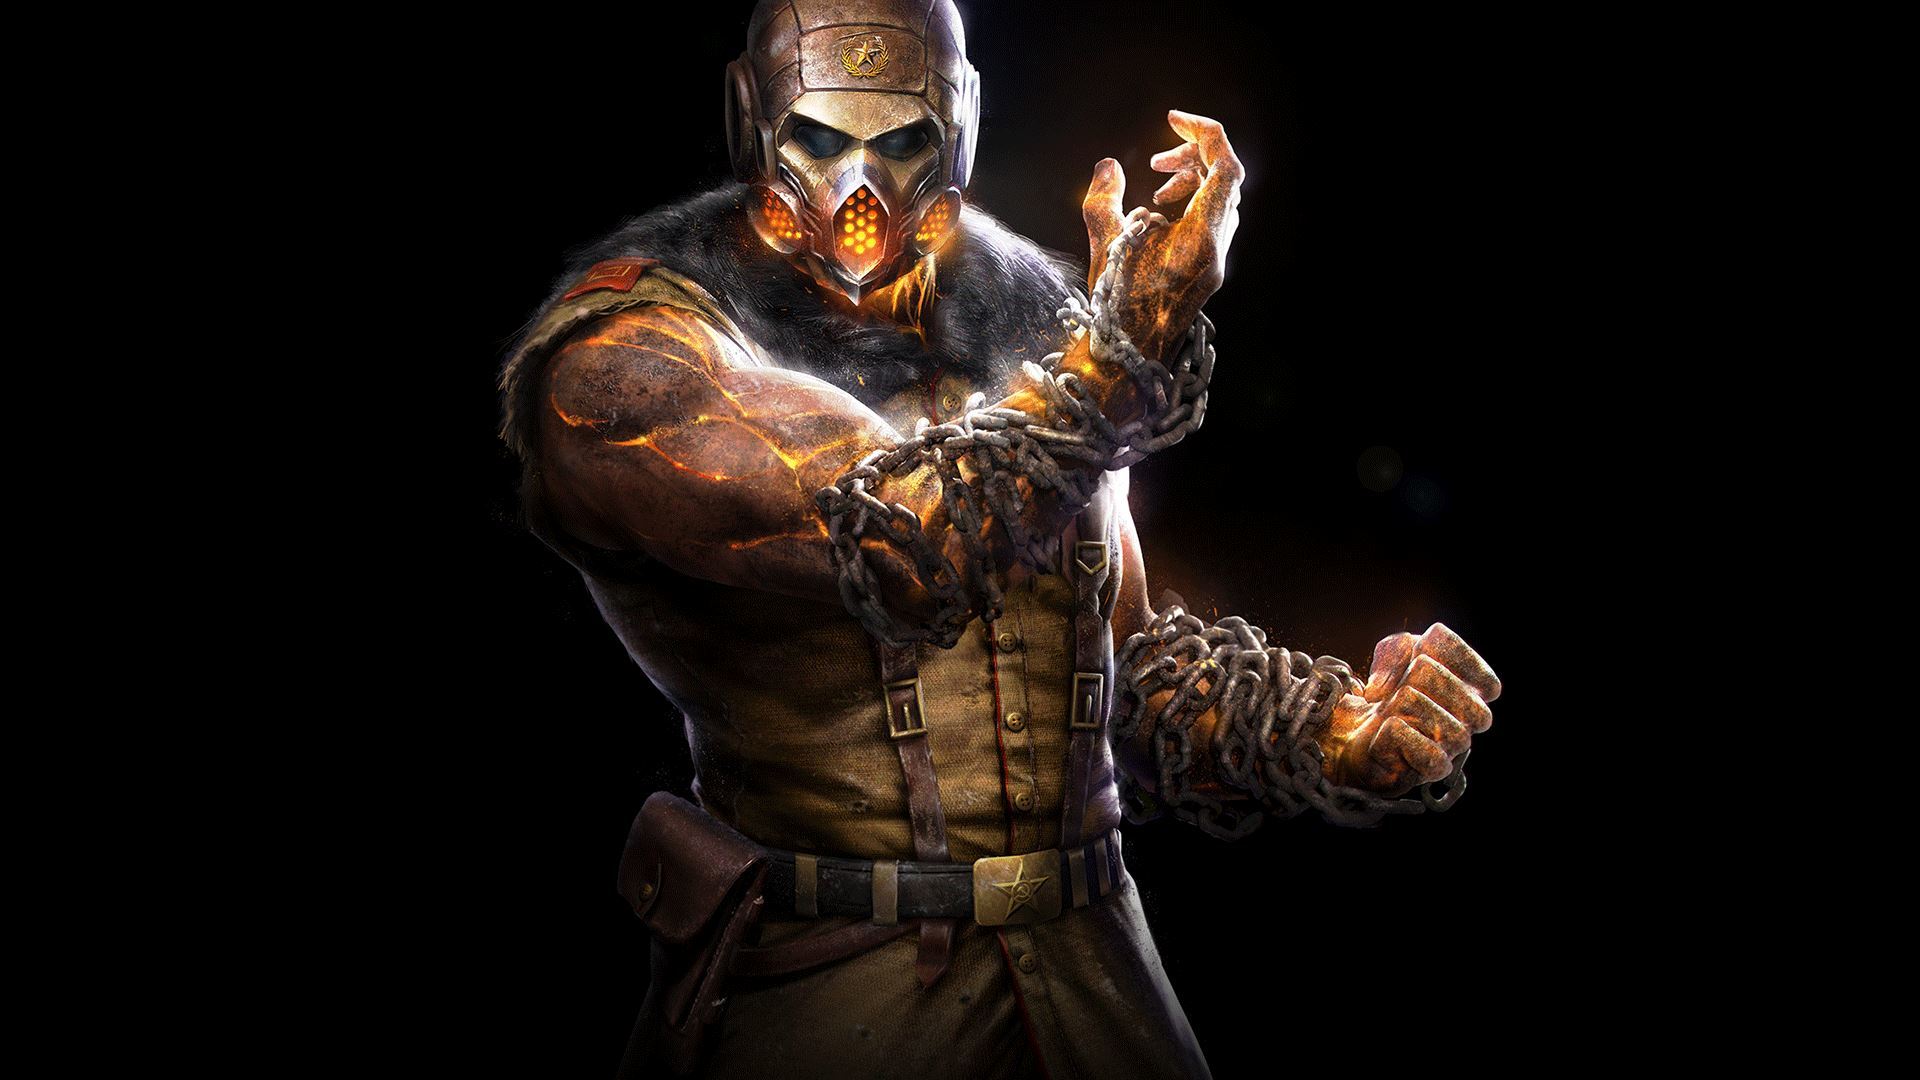 General 1920x1080 Mortal Kombat video games video game warriors video game art simple background black background Scorpion (Mortal Kombat) video game characters